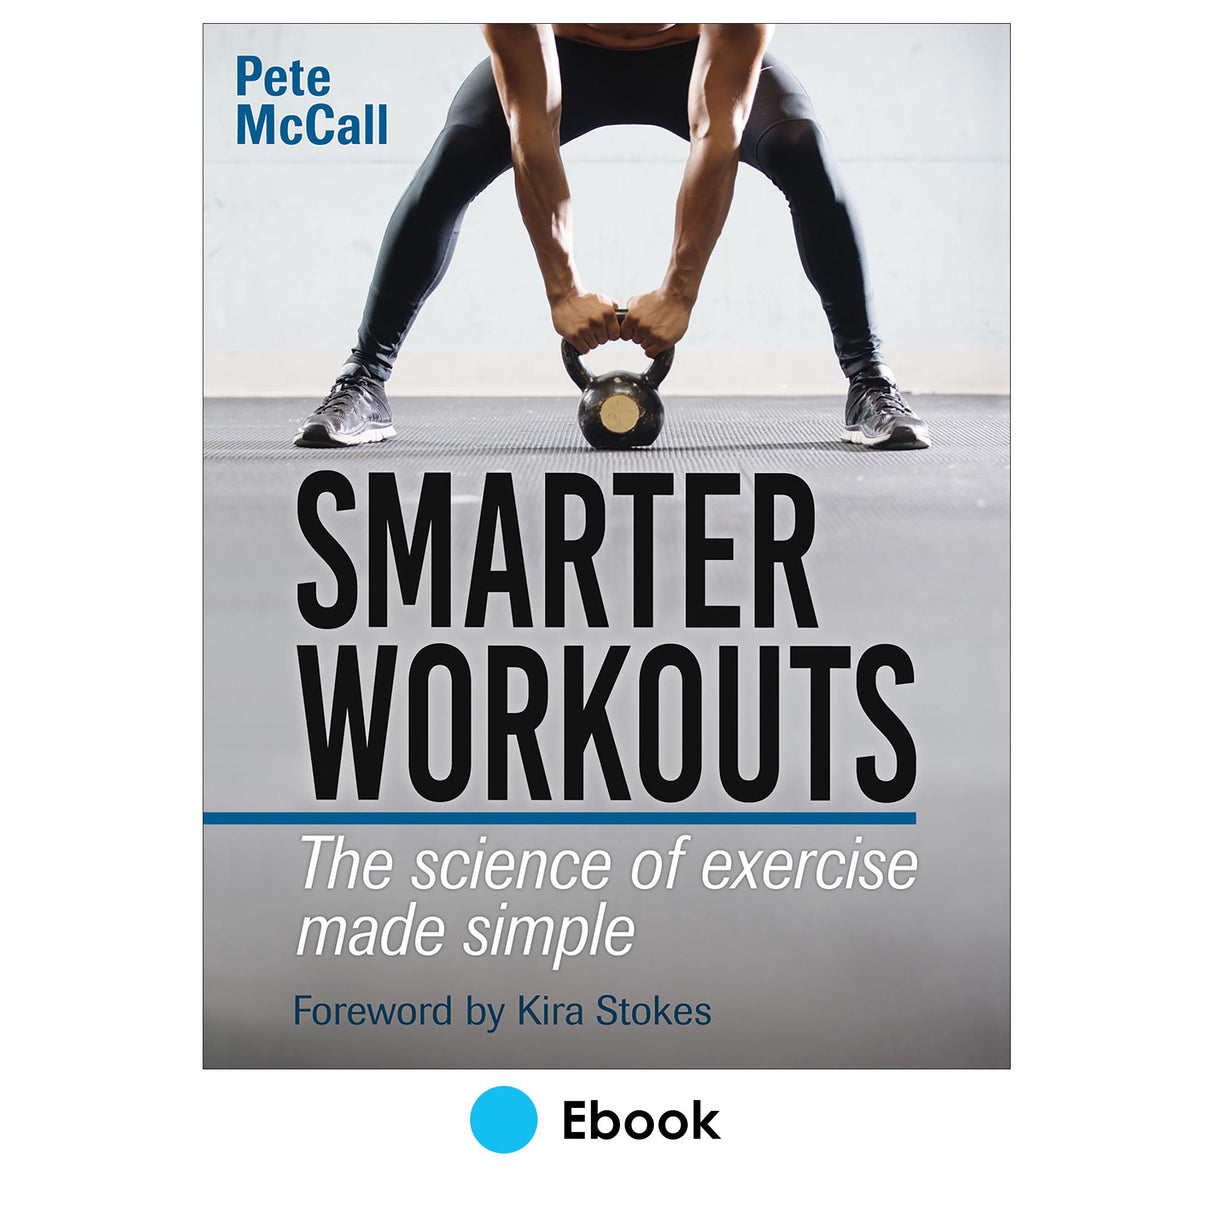 Smarter Workouts epub